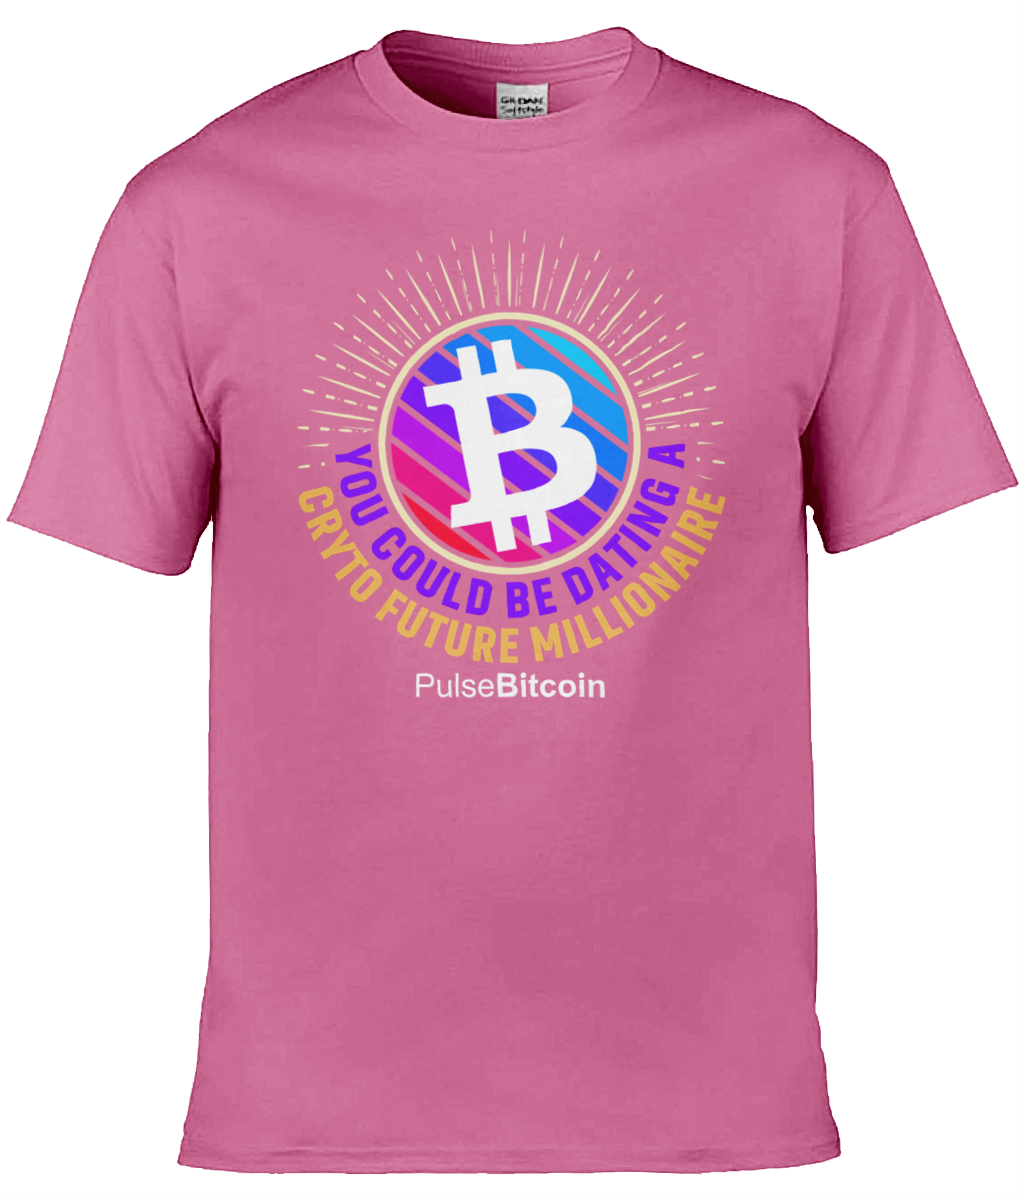 Dating a Crypto Millionaire T-shirt, PulseBitcoin Unisex T-shirt